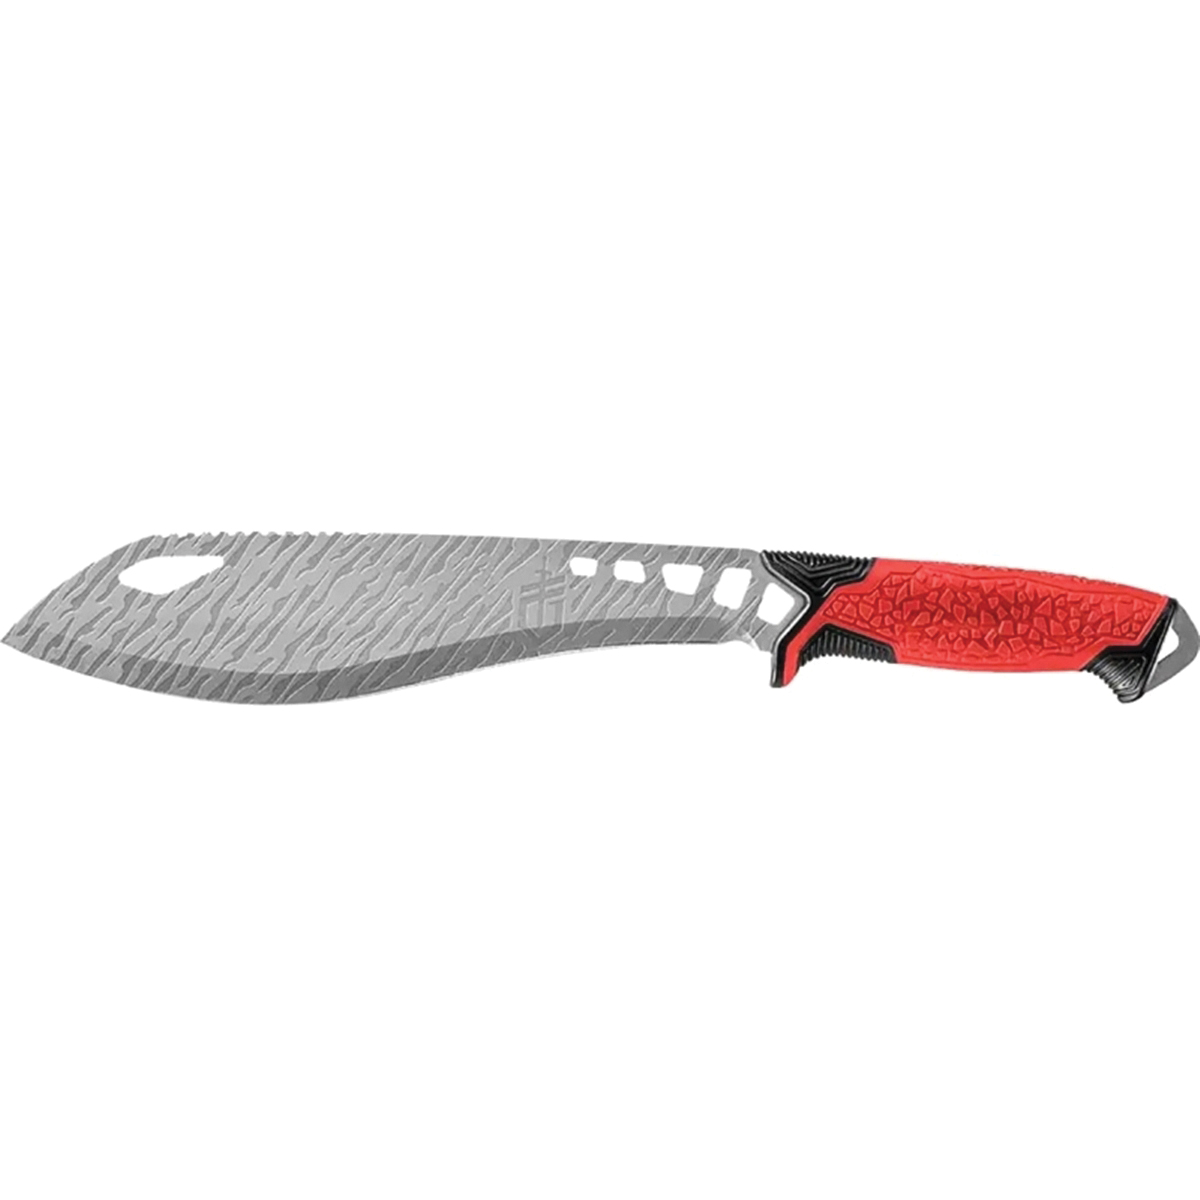 31-003470 Machete Knife, 14-1/2 in OAL, 9 in L Blade, Stainless Steel Blade, Fixed Blade